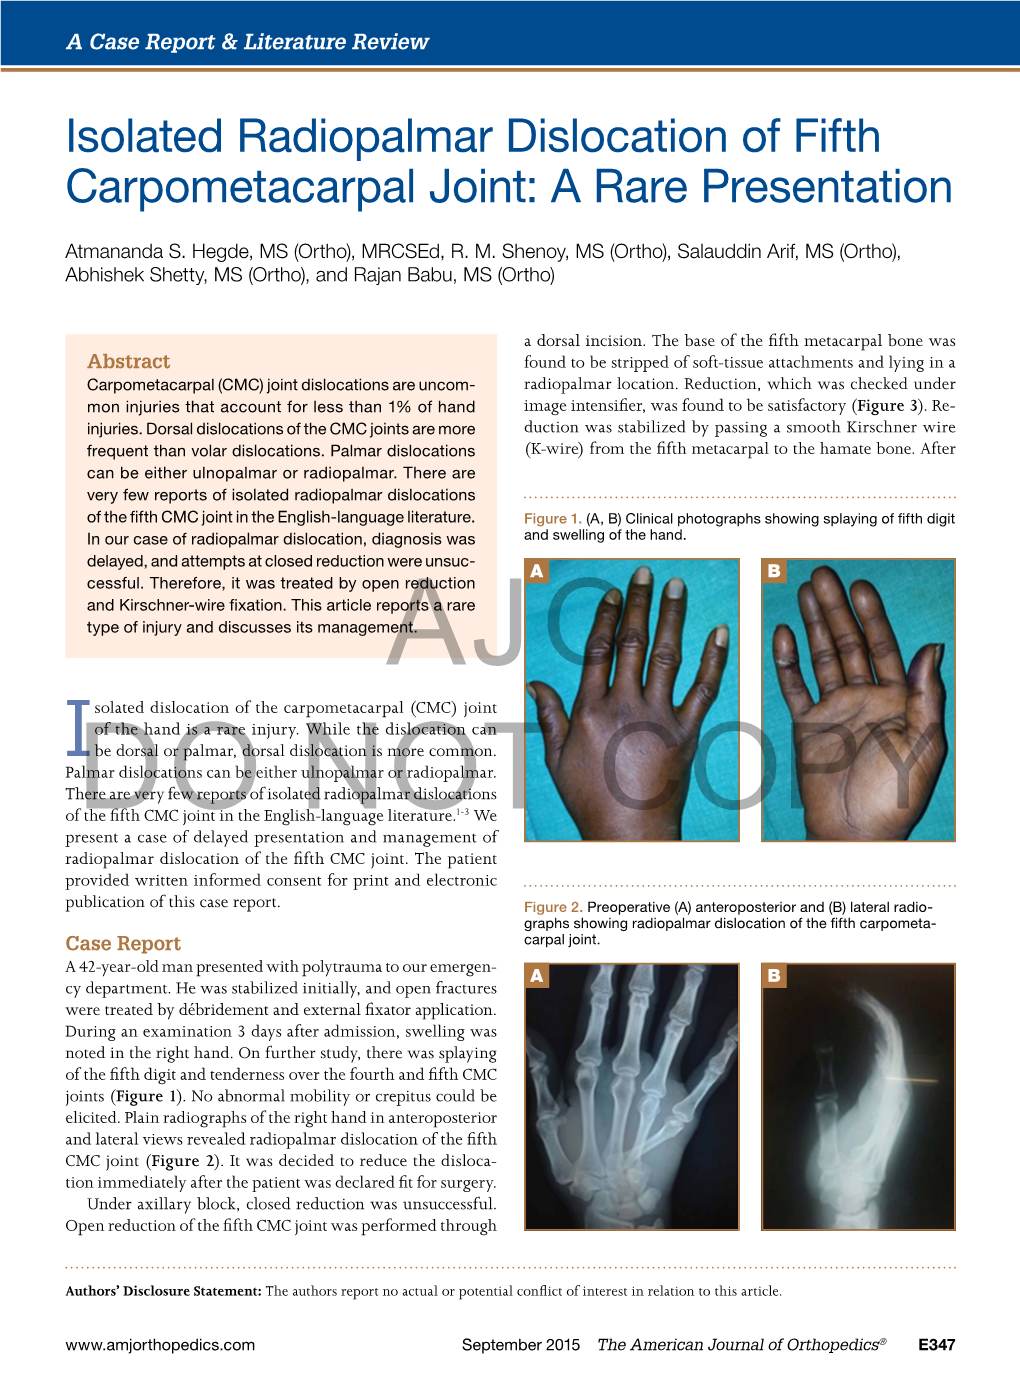 Isolated Radiopalmar Dislocation of Fifth Carpometacarpal Joint: a Rare Presentation